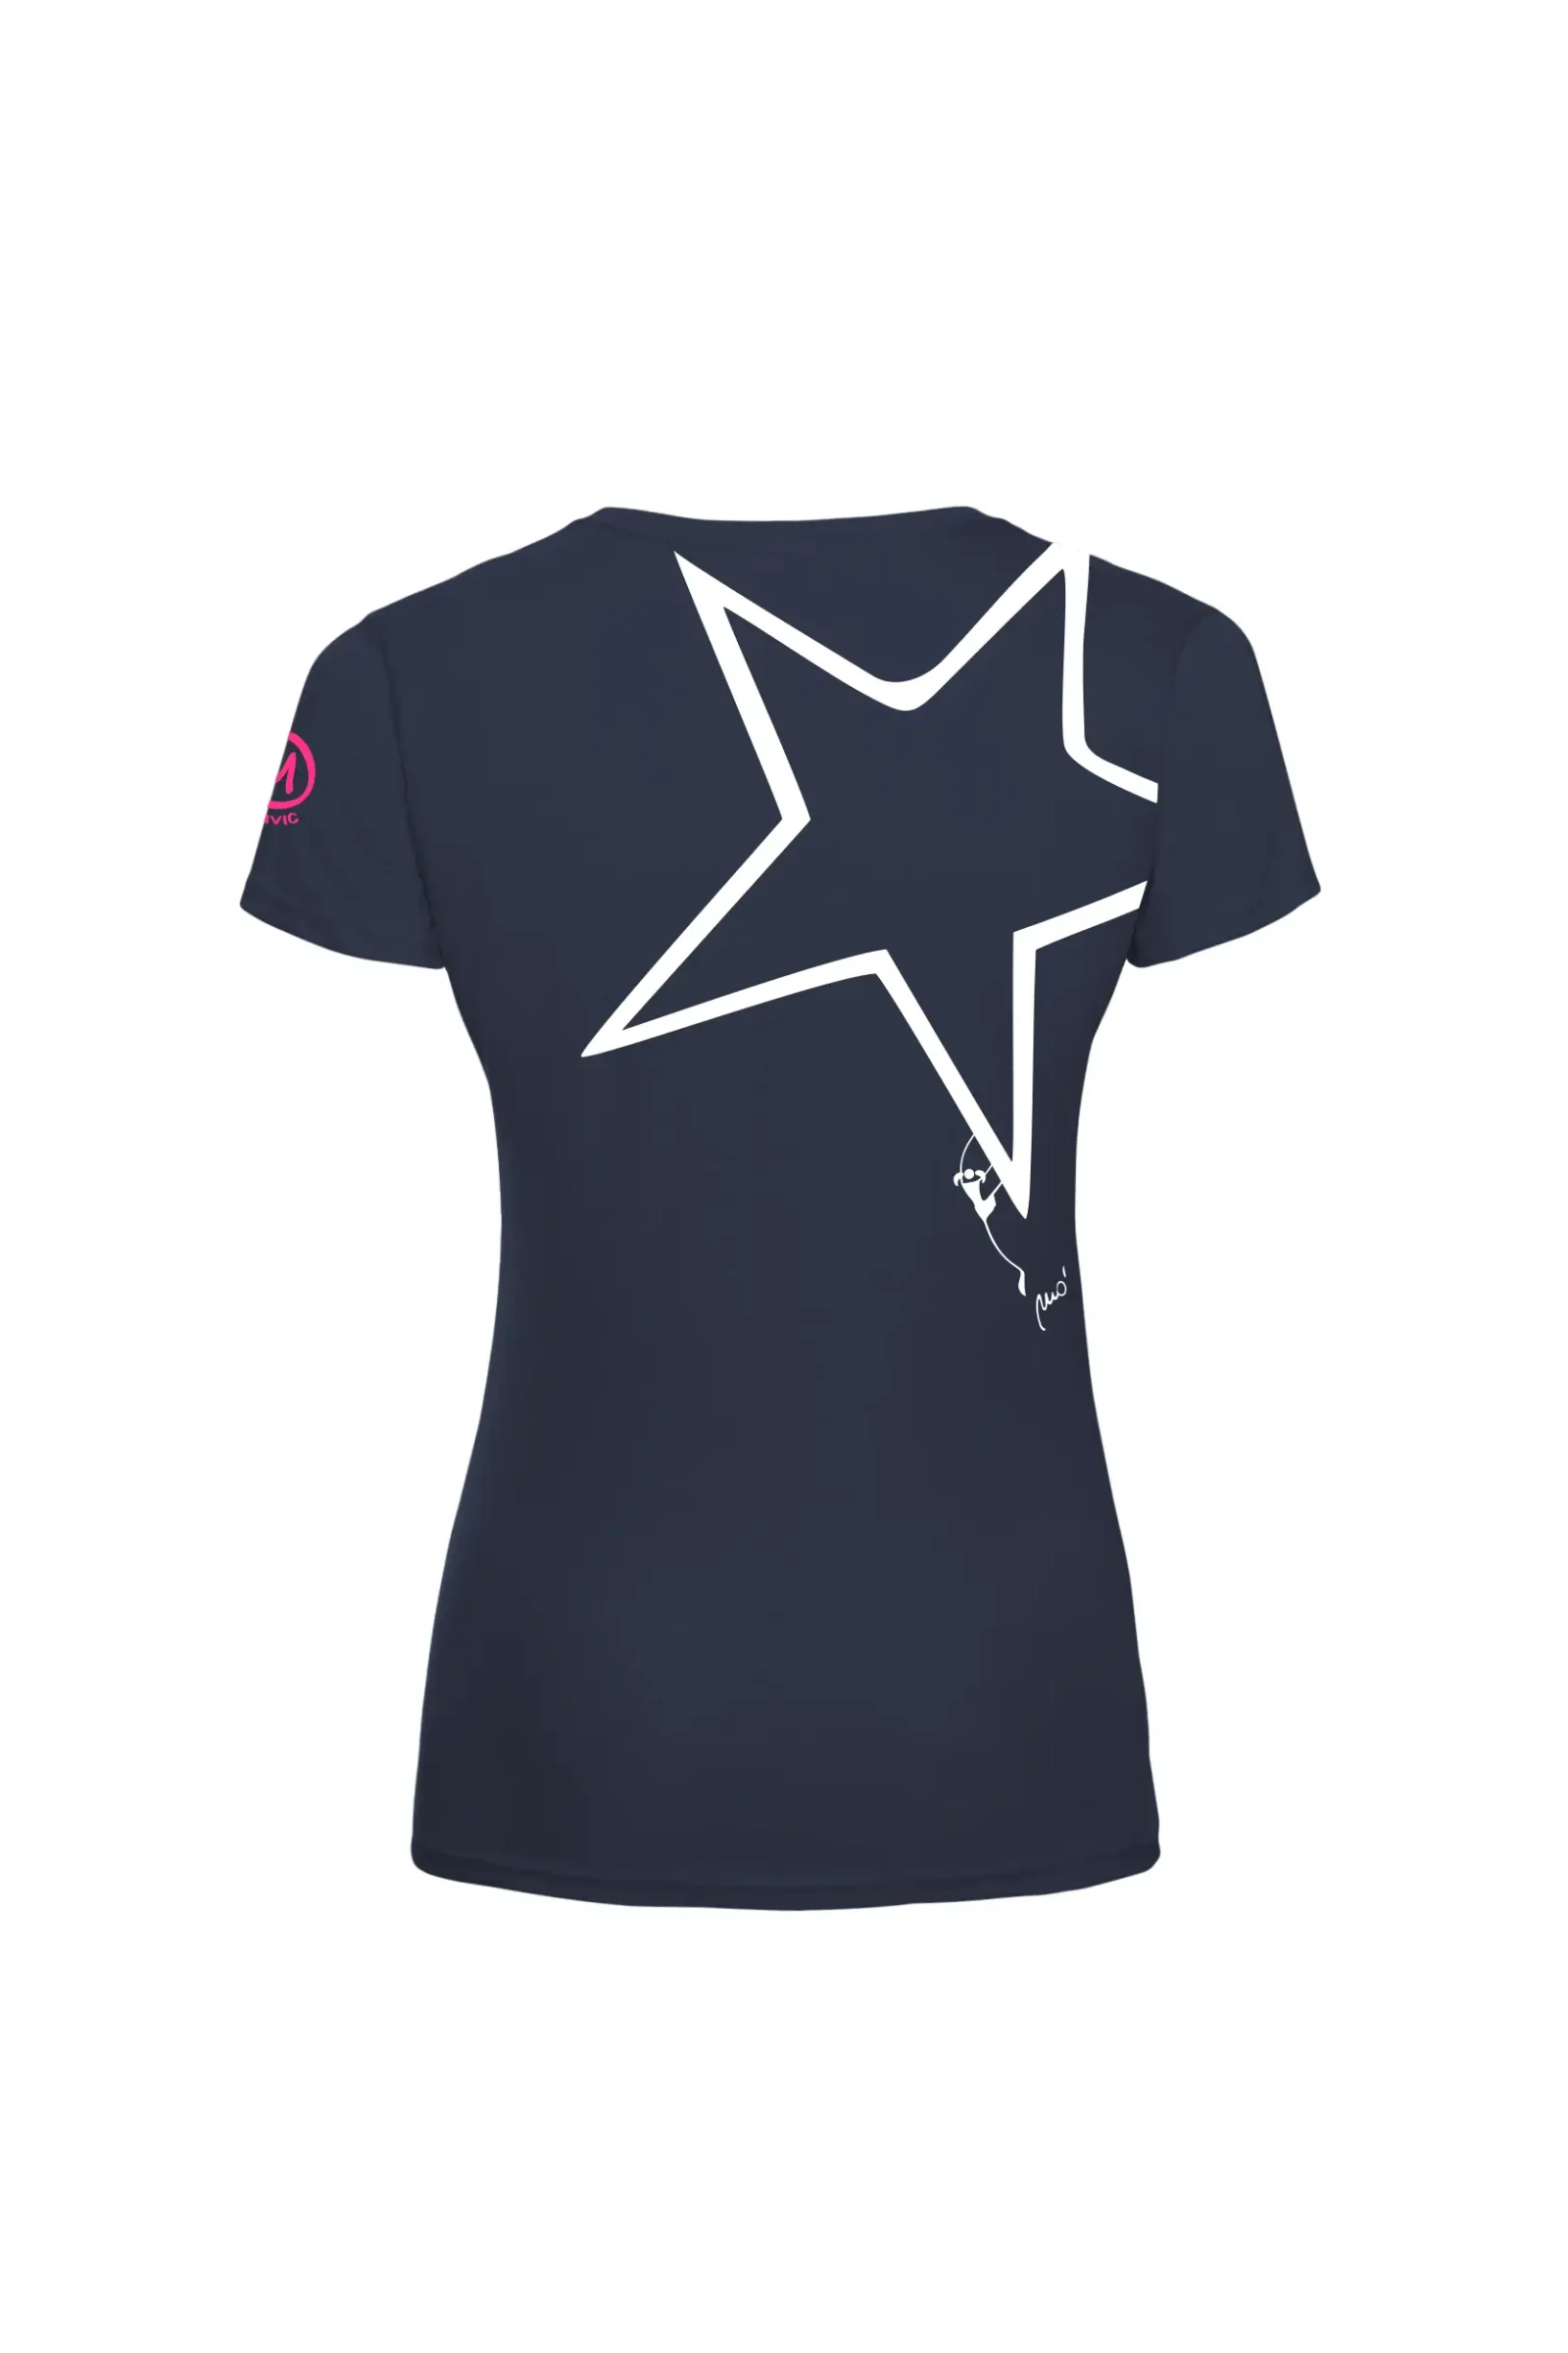 Women's climbing t-shirt - navy blue cotton - "Superstar" graphic -SHARON by MONVIC